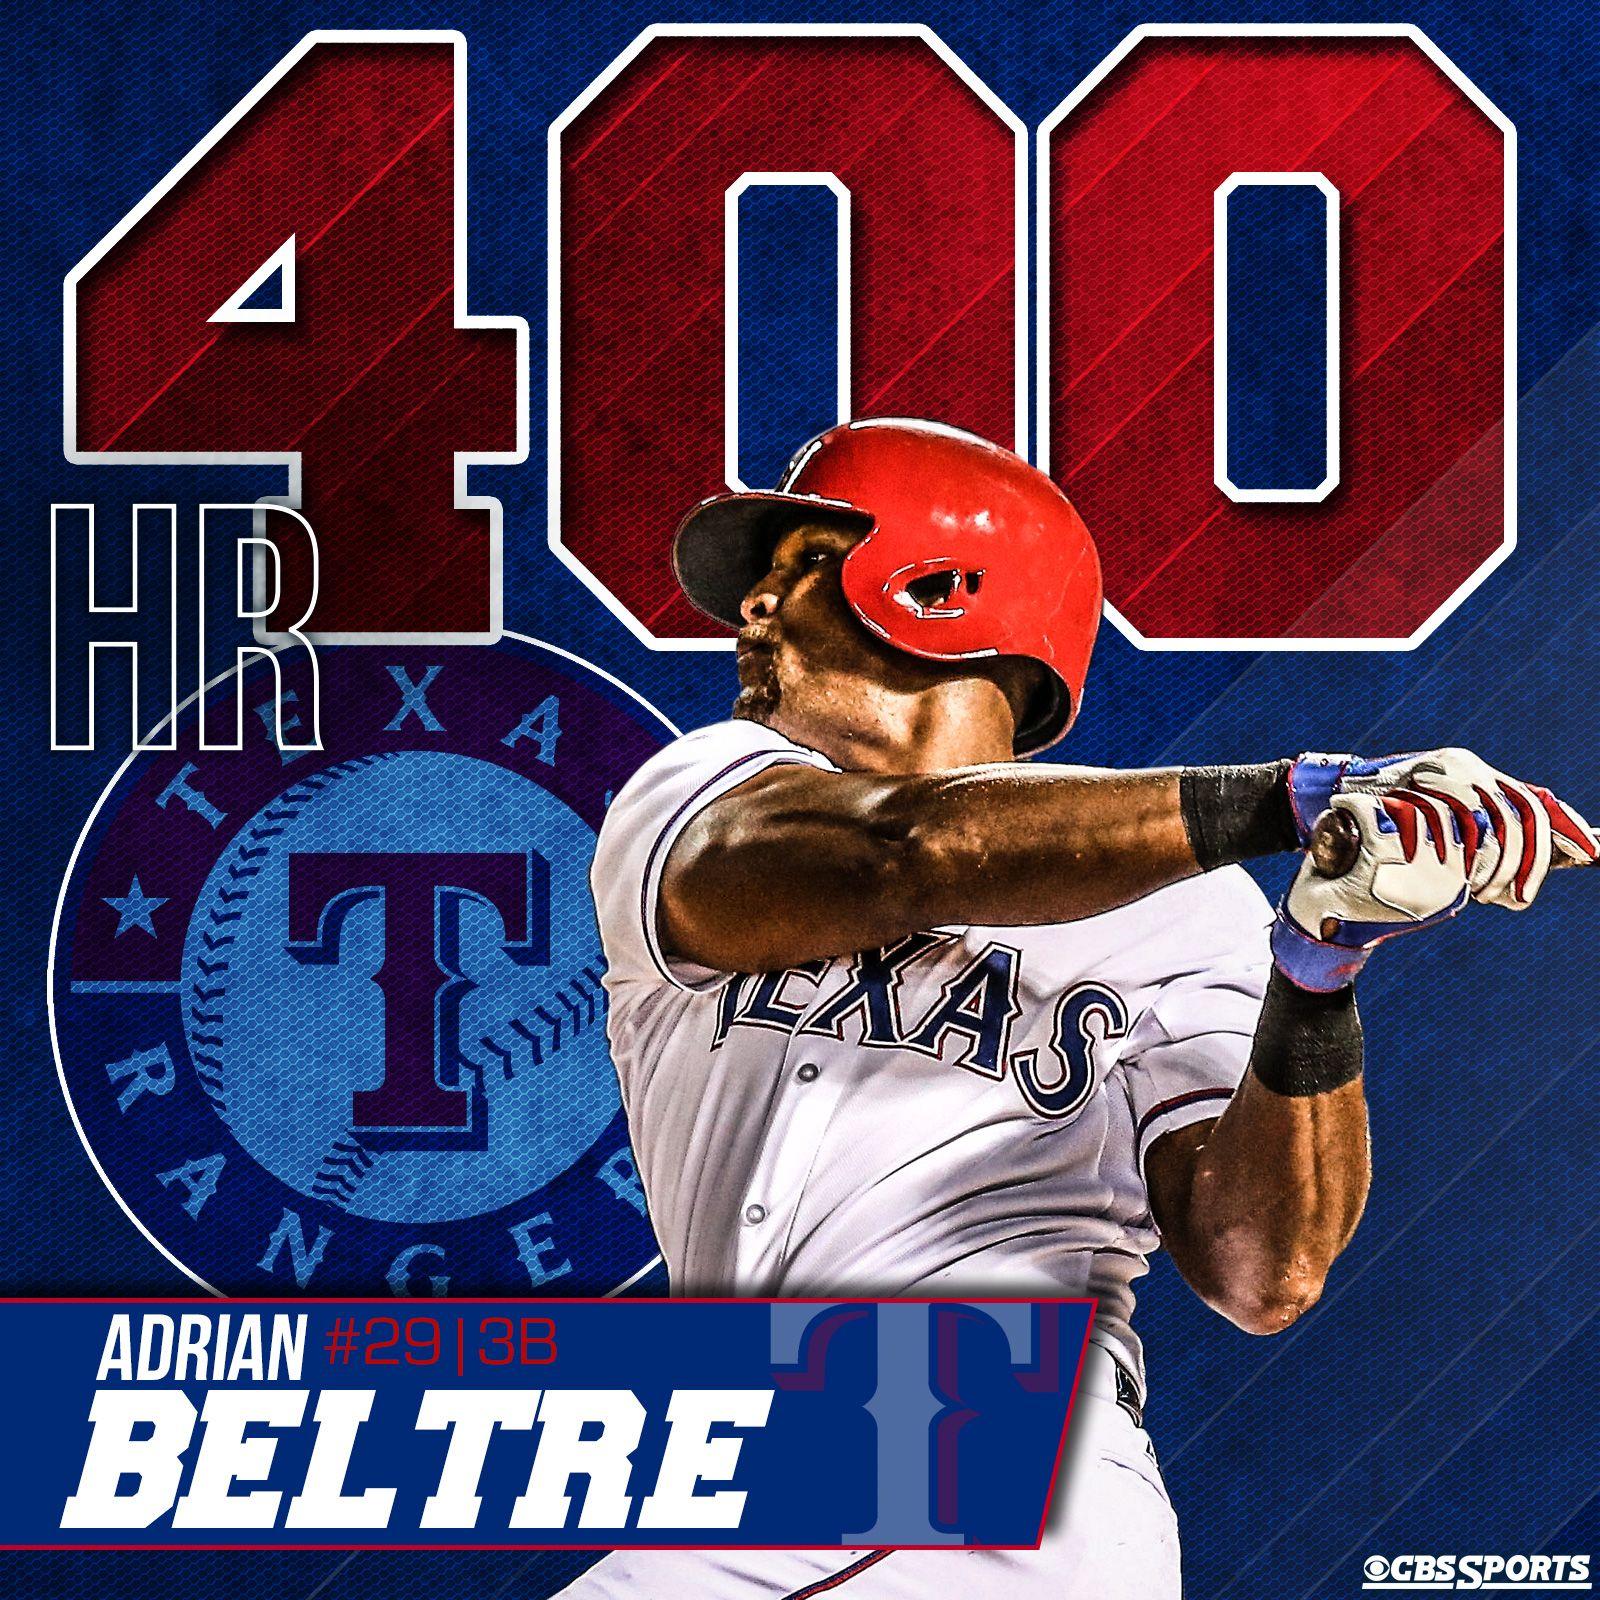 WATCH: Adrian Beltre hits his 400th career home run